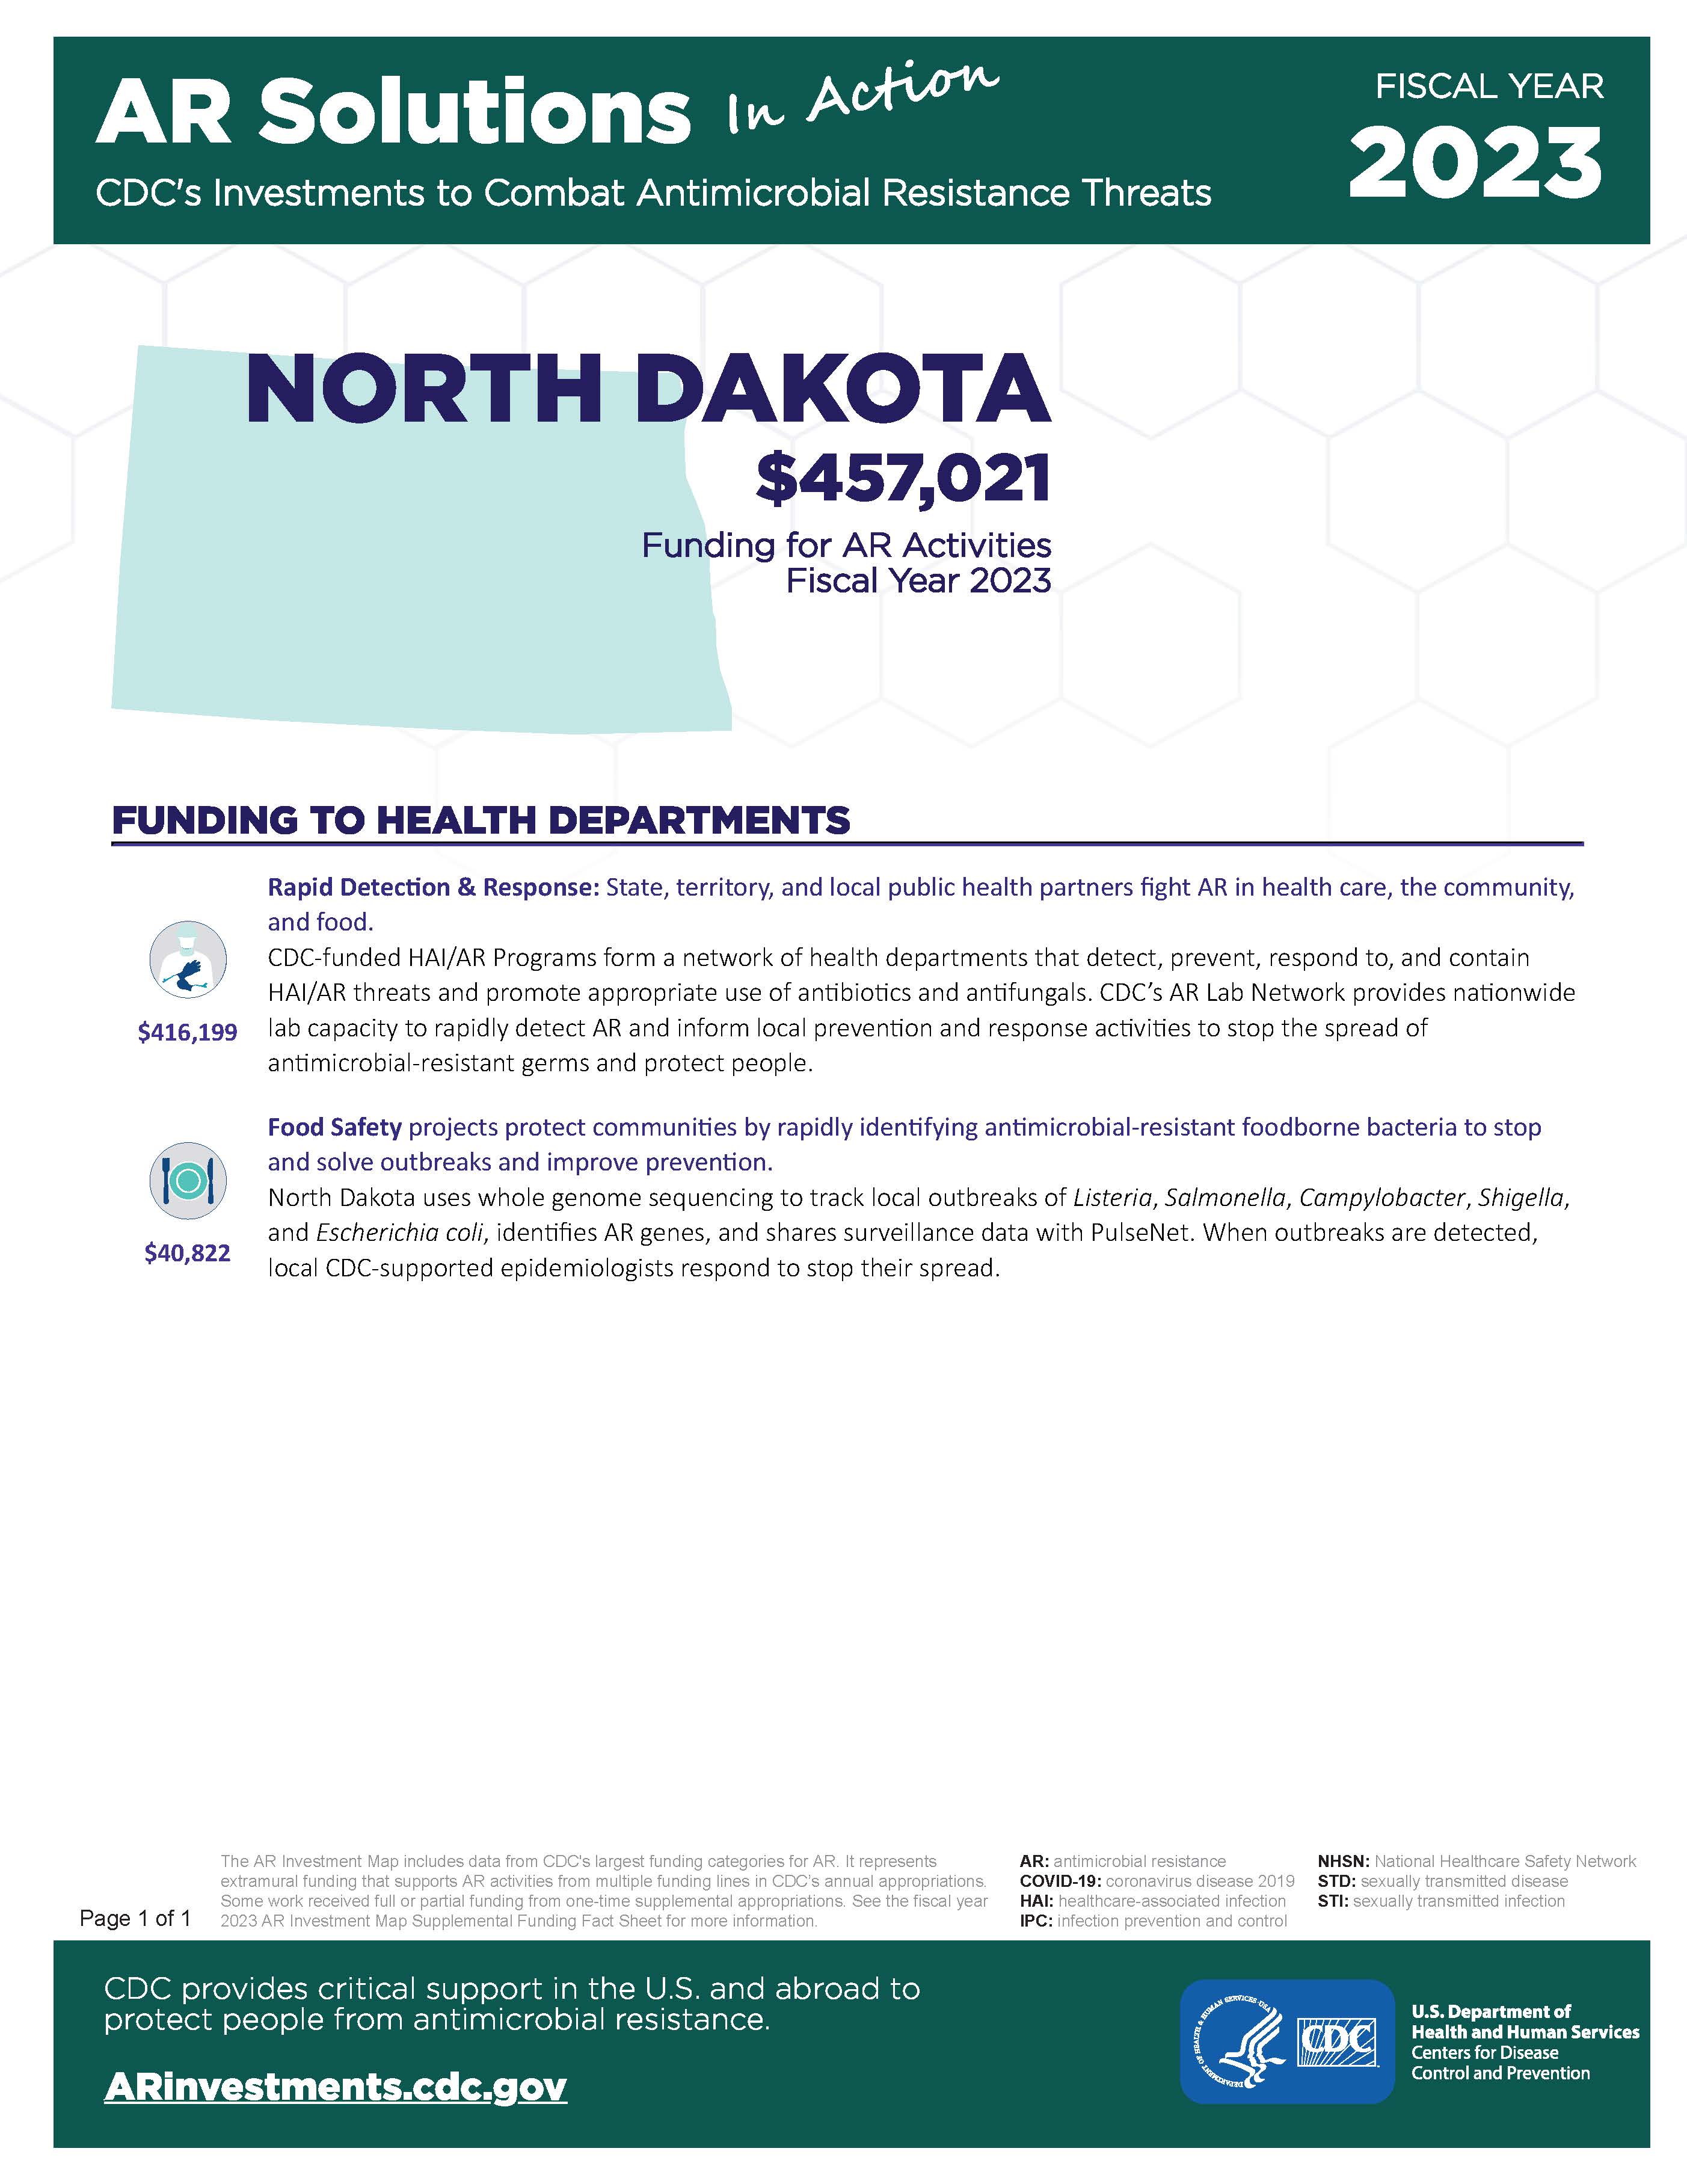 View Factsheet for North Dakota